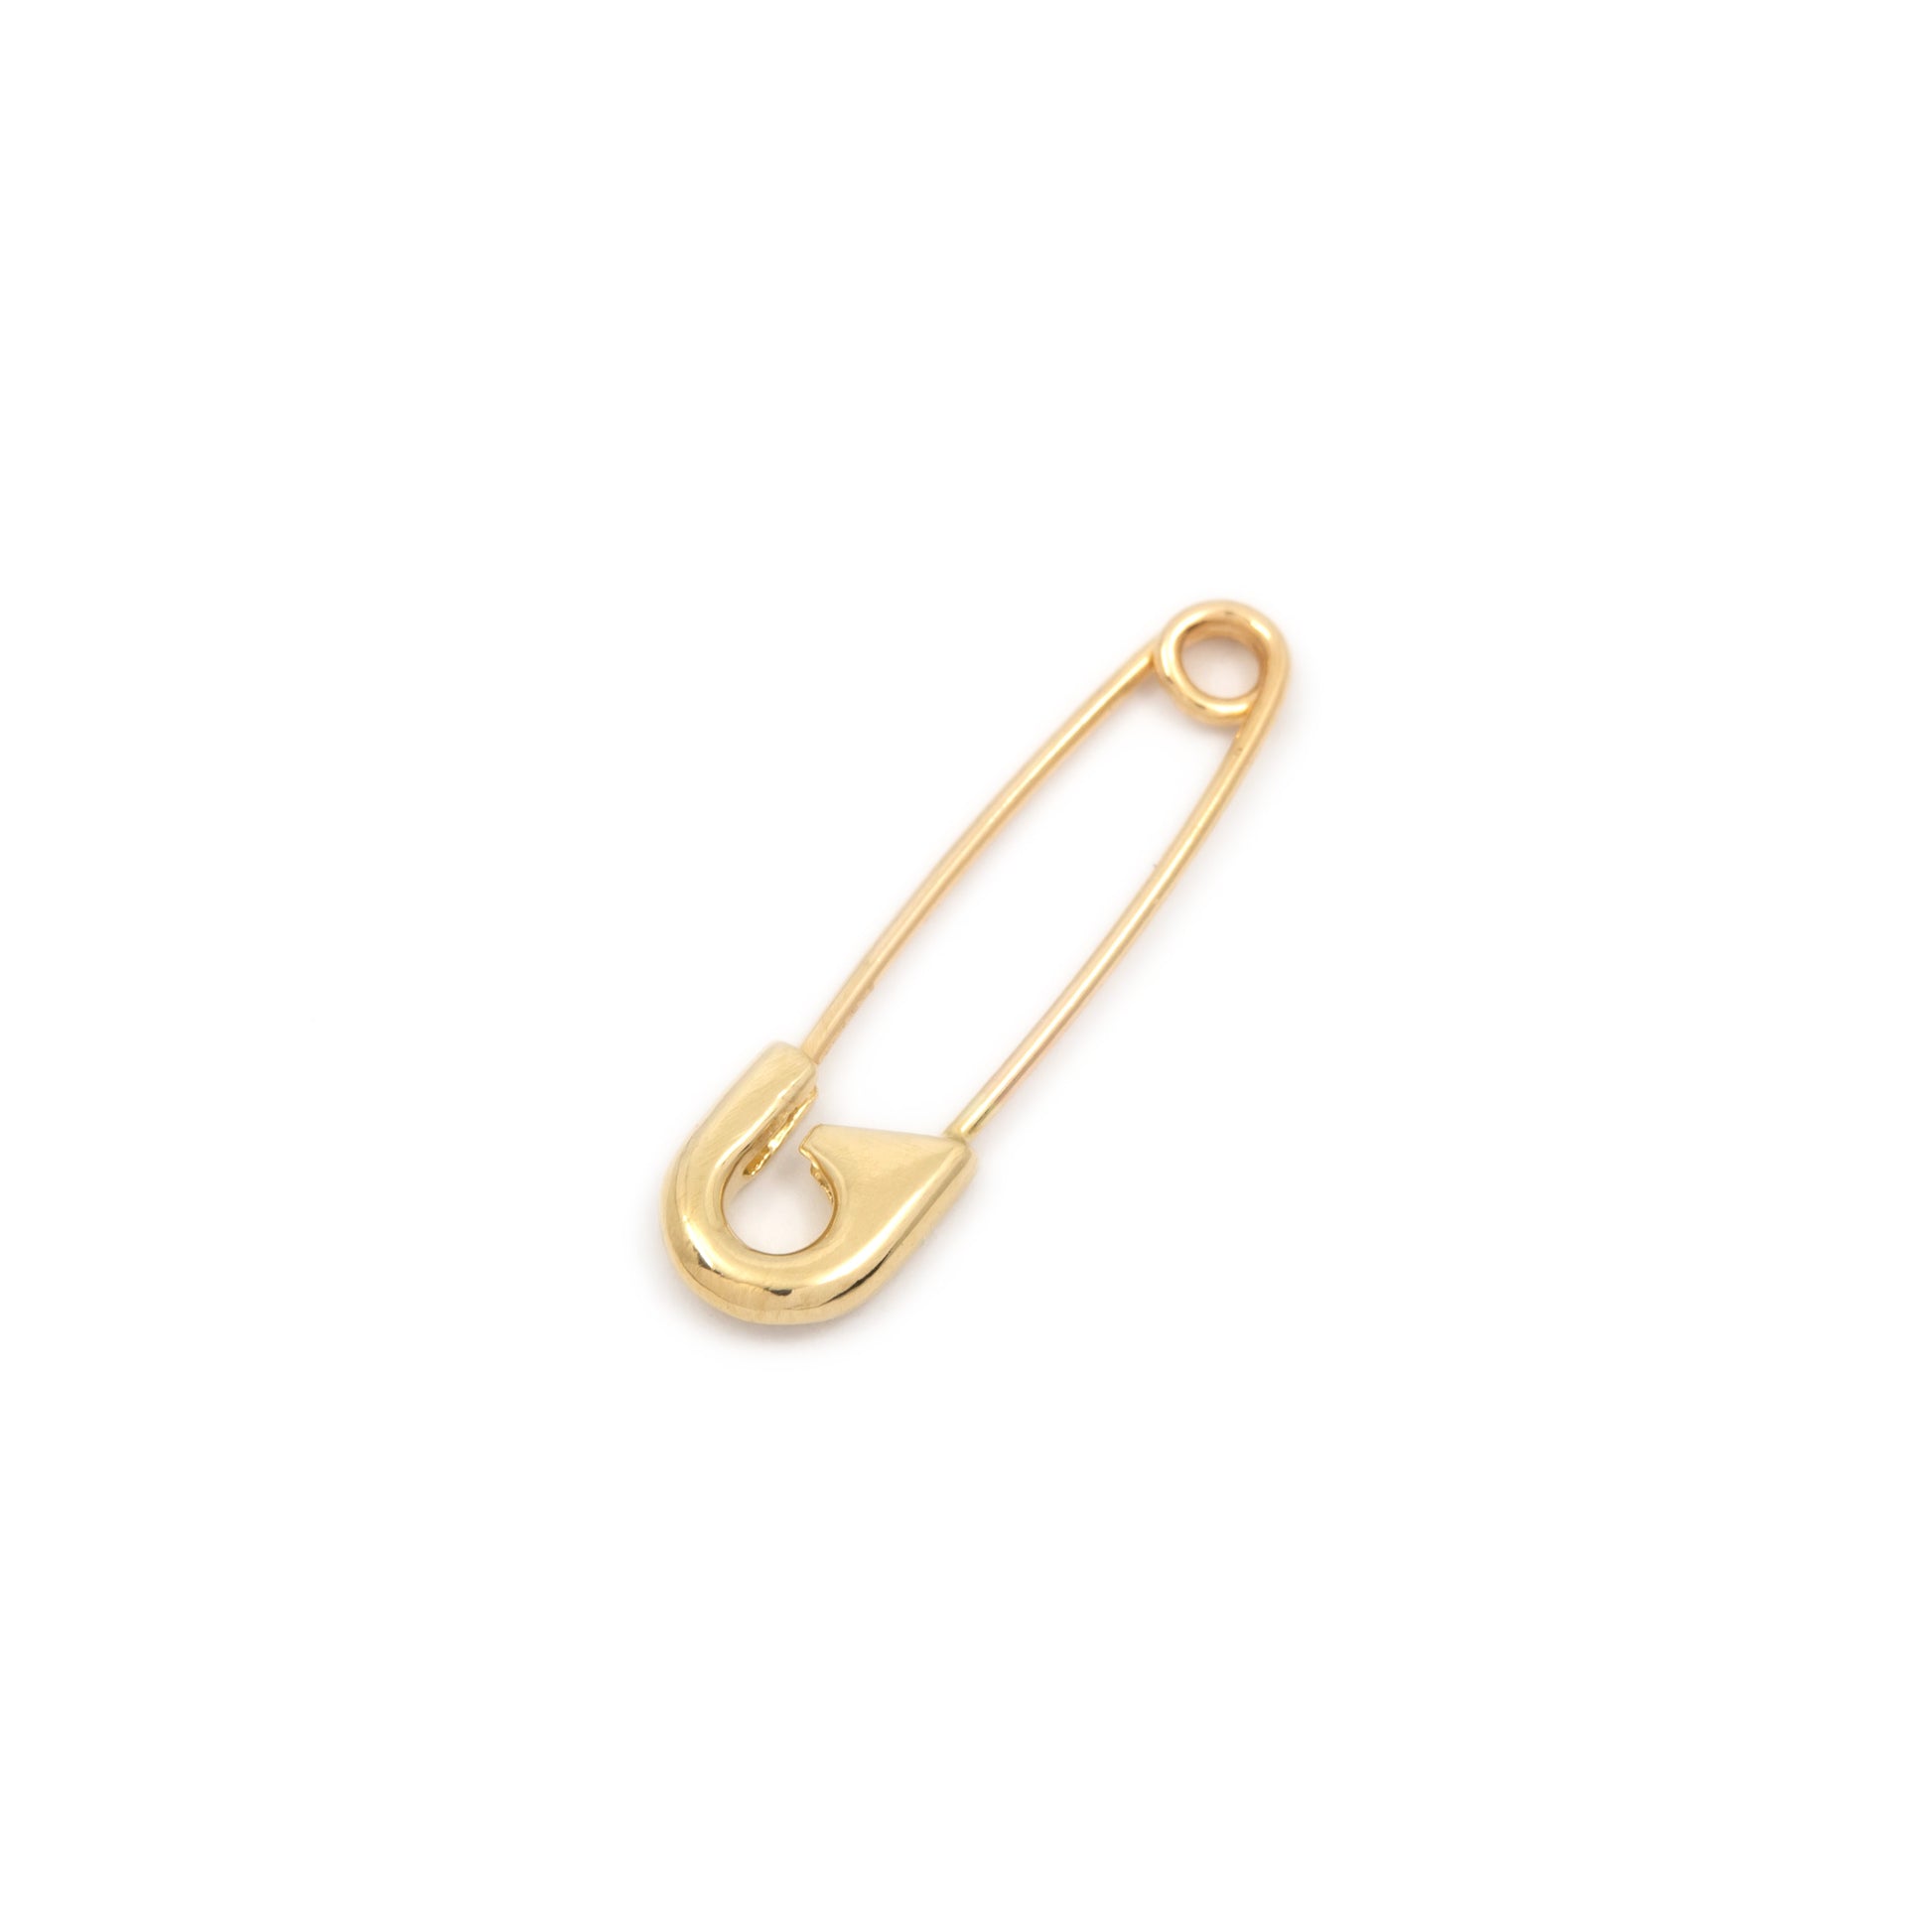 Buy Safety Pin by Kidou Studios - Earrings